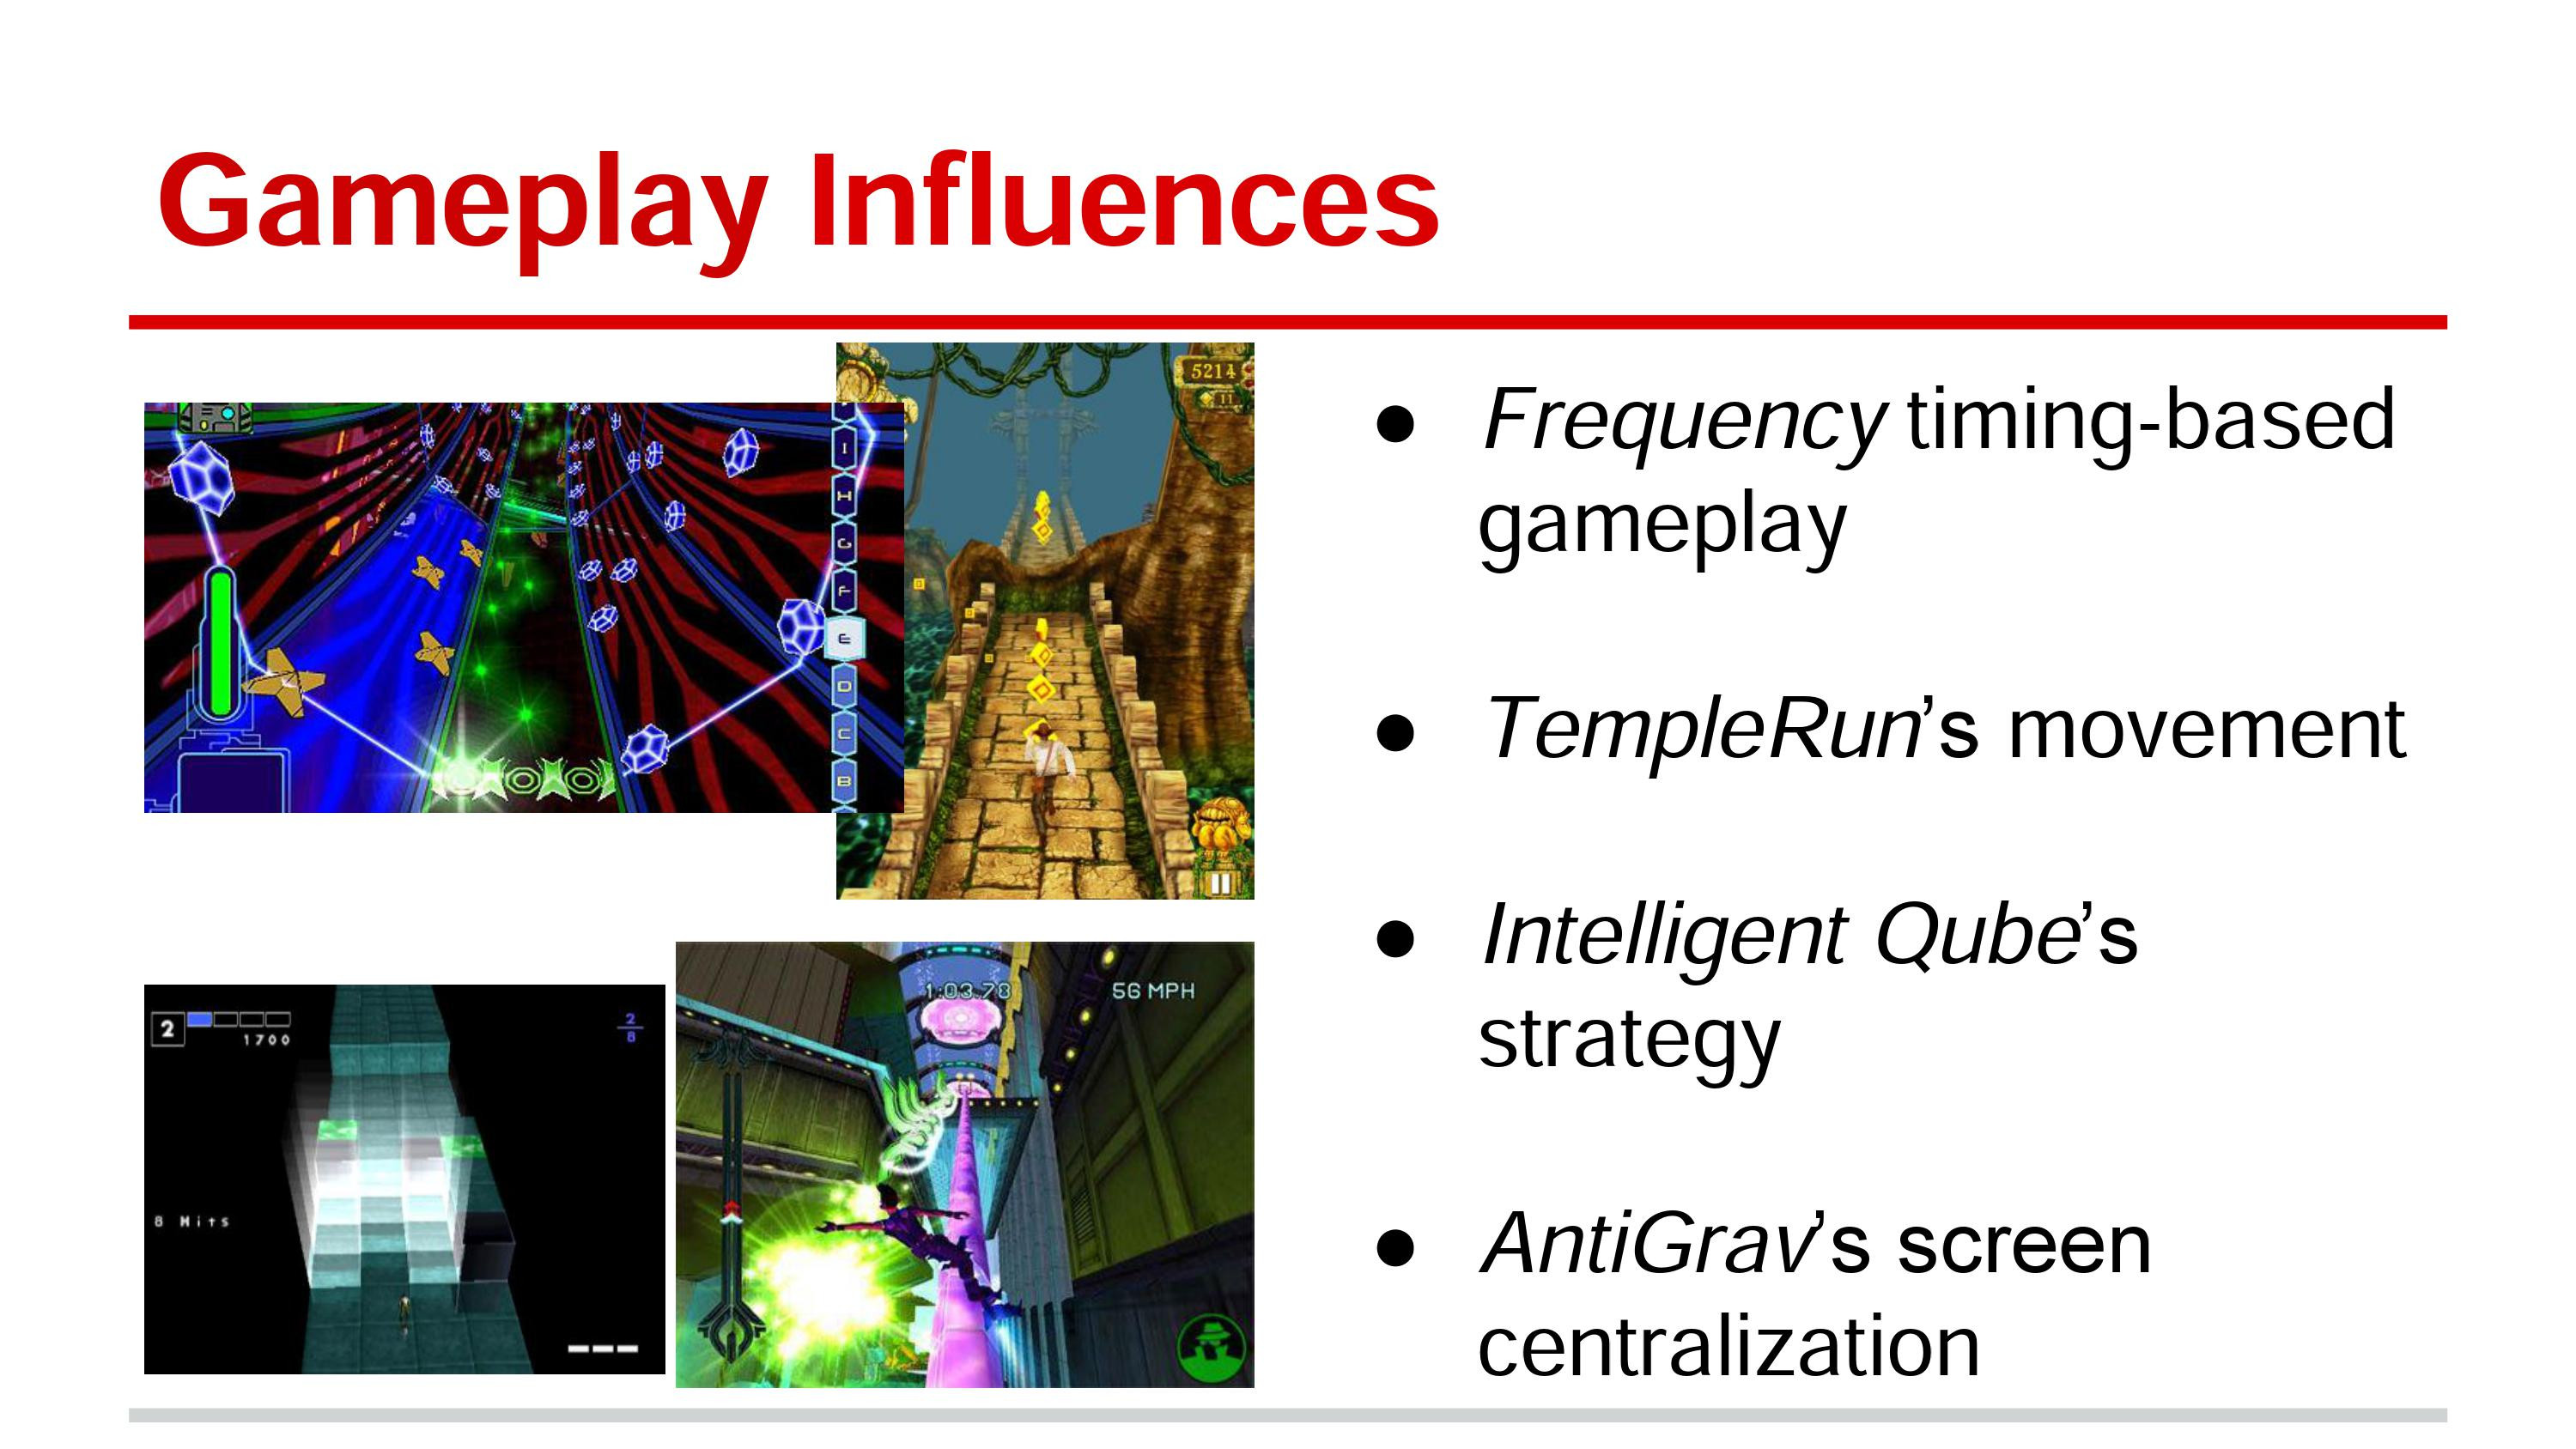 Gameplay Influences Slide